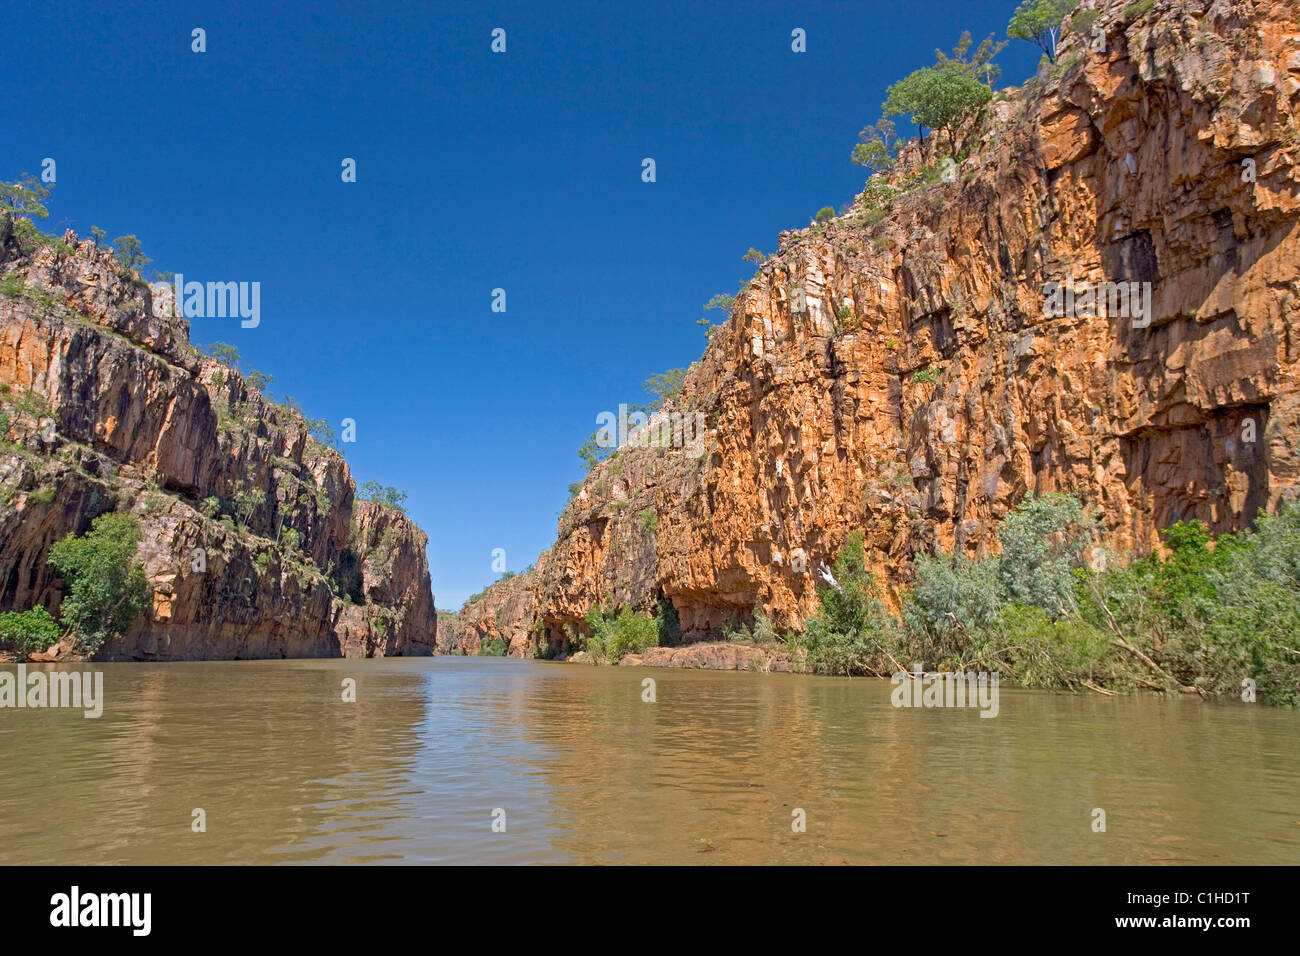 Australia, Northern Territory, Nitmiluk National Park & Katherine gorge, near Katherine Stock Photo